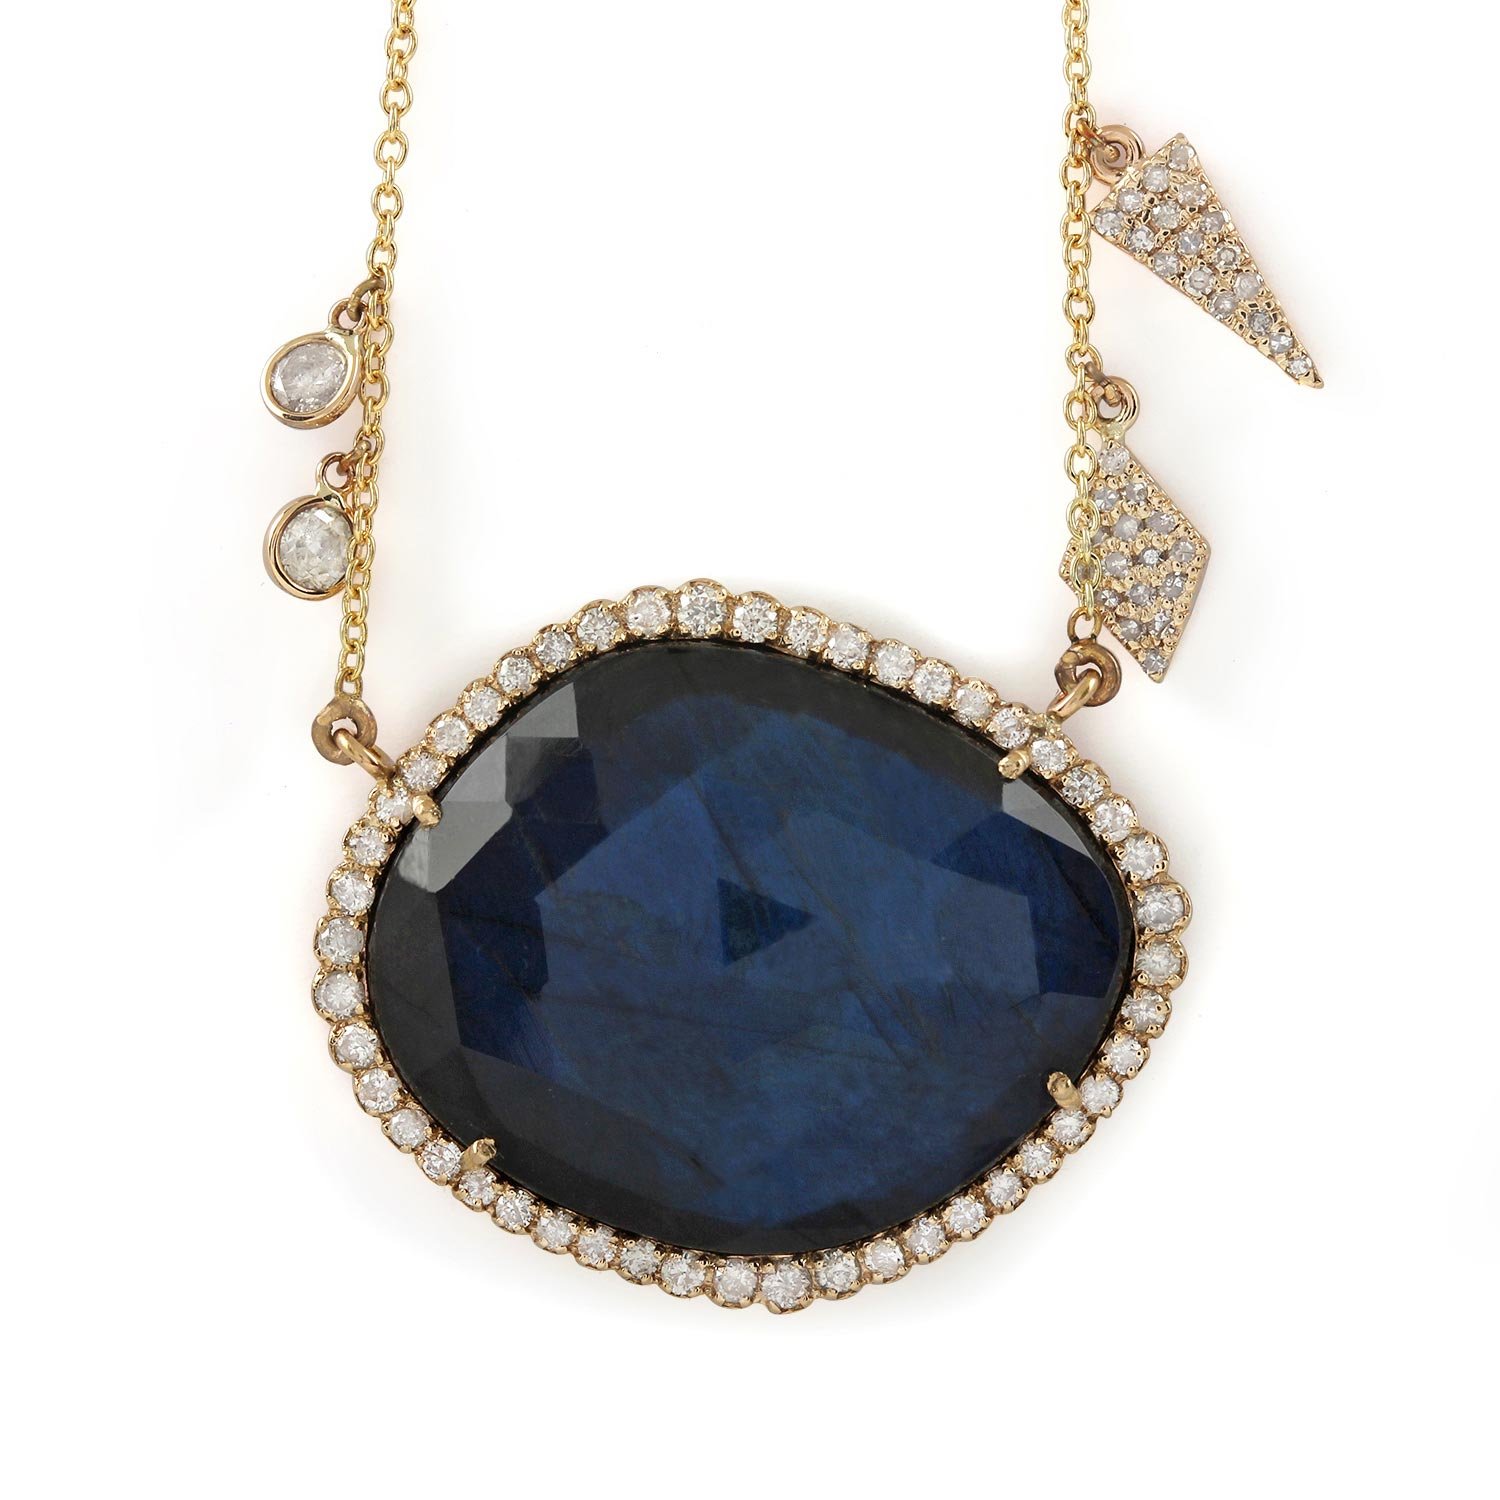 14K Solid Gold Labradorite Pave Diamond Pendant Chain Necklace Fine Jewelry